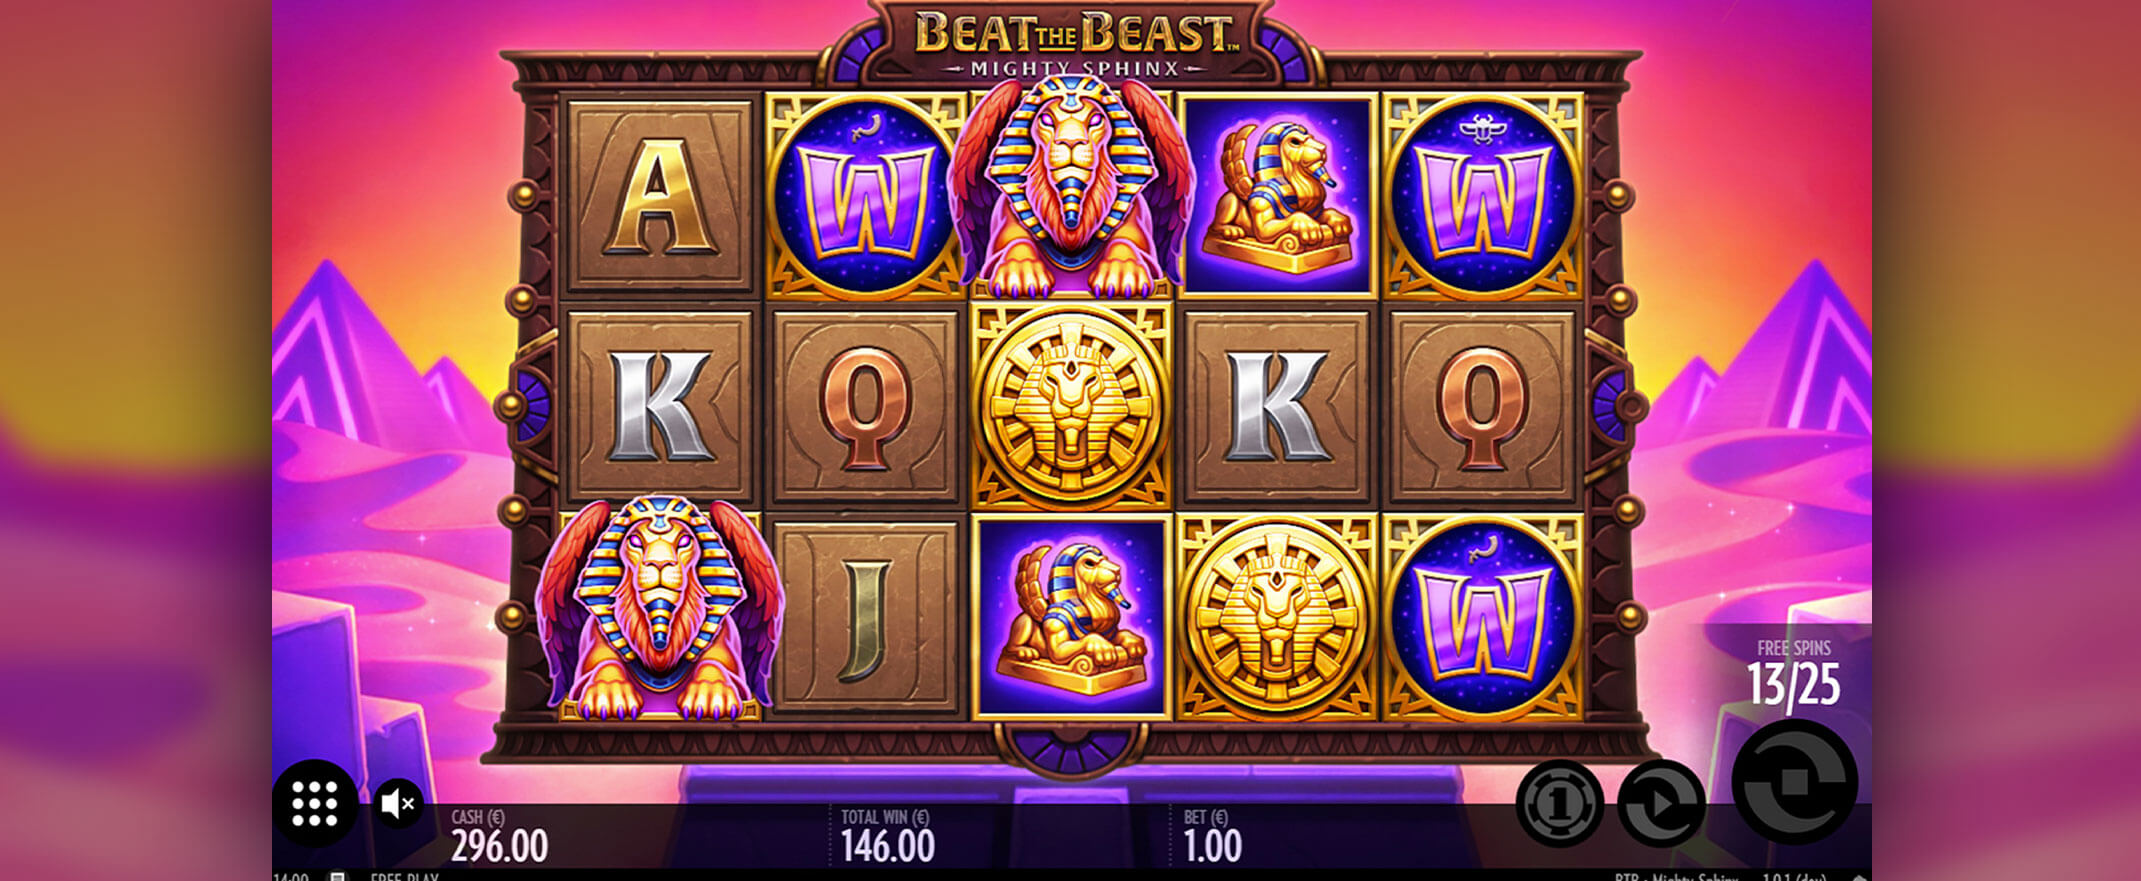 Beat the Beast: Mighty Sphinx Spielautomaten Bewertung